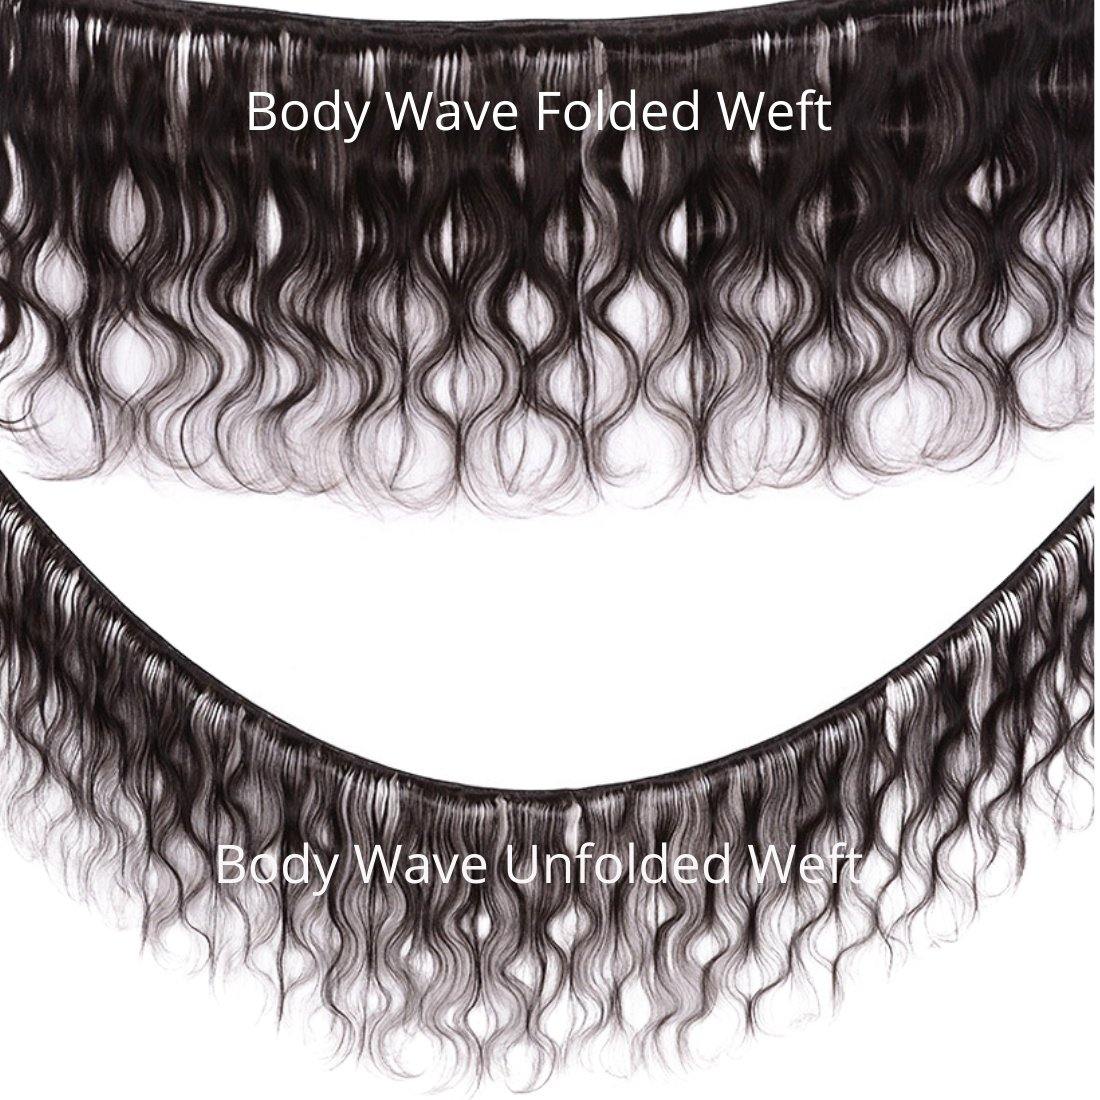 Brazilian Body Wave Hair 4 Bundles 100% Human Hair Extension Weaves - Seyna Hair